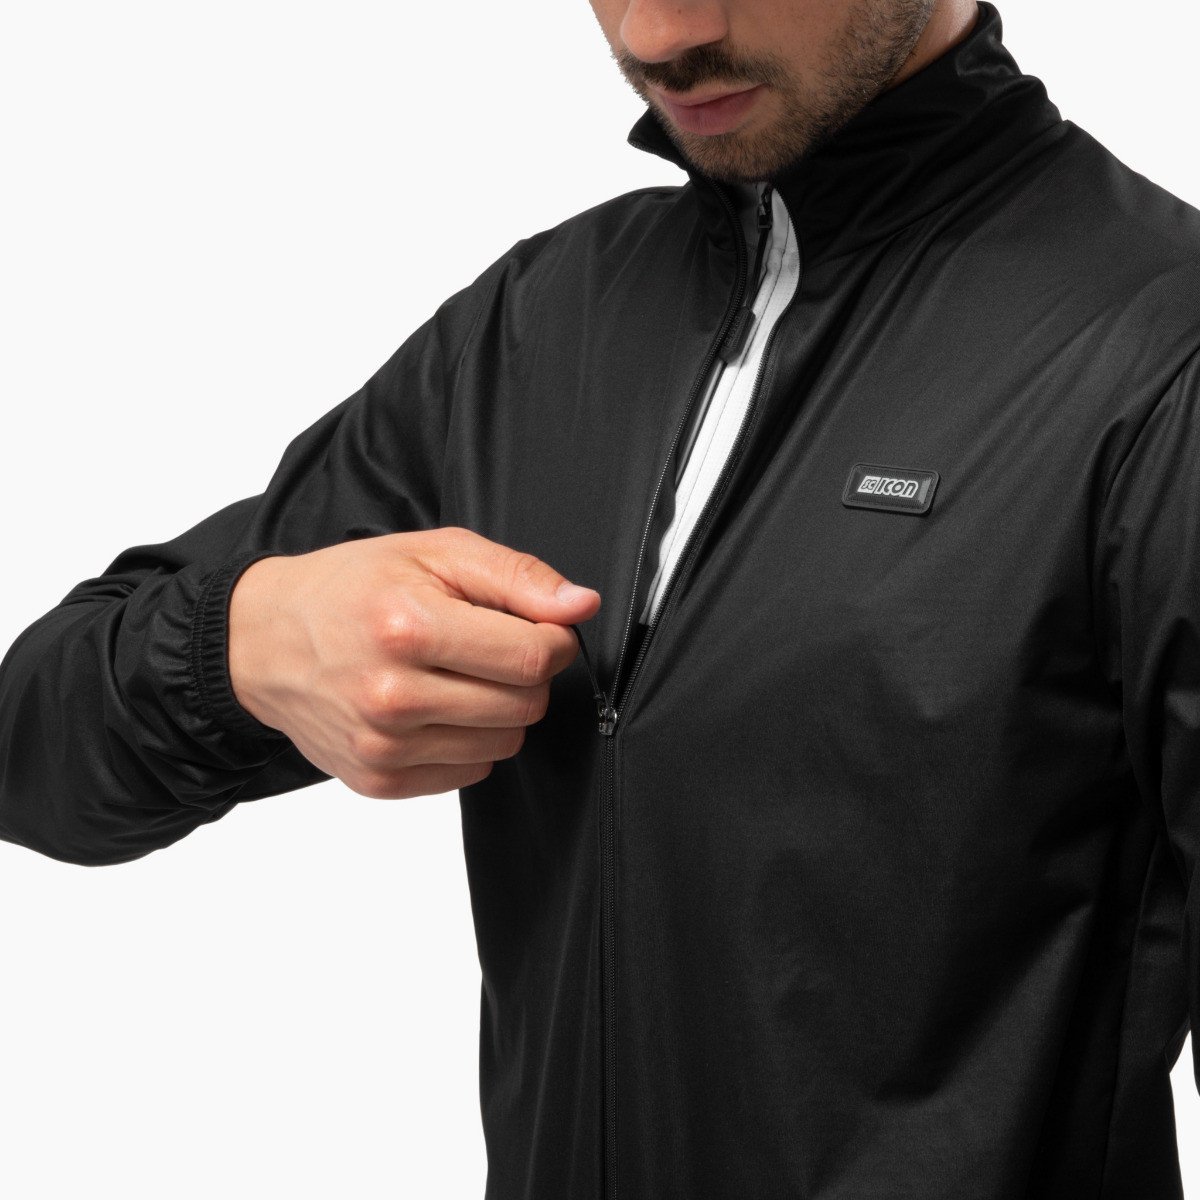 Scicon Sports | Wind Rain Jacket Long Sleeve - Black - RJ111202